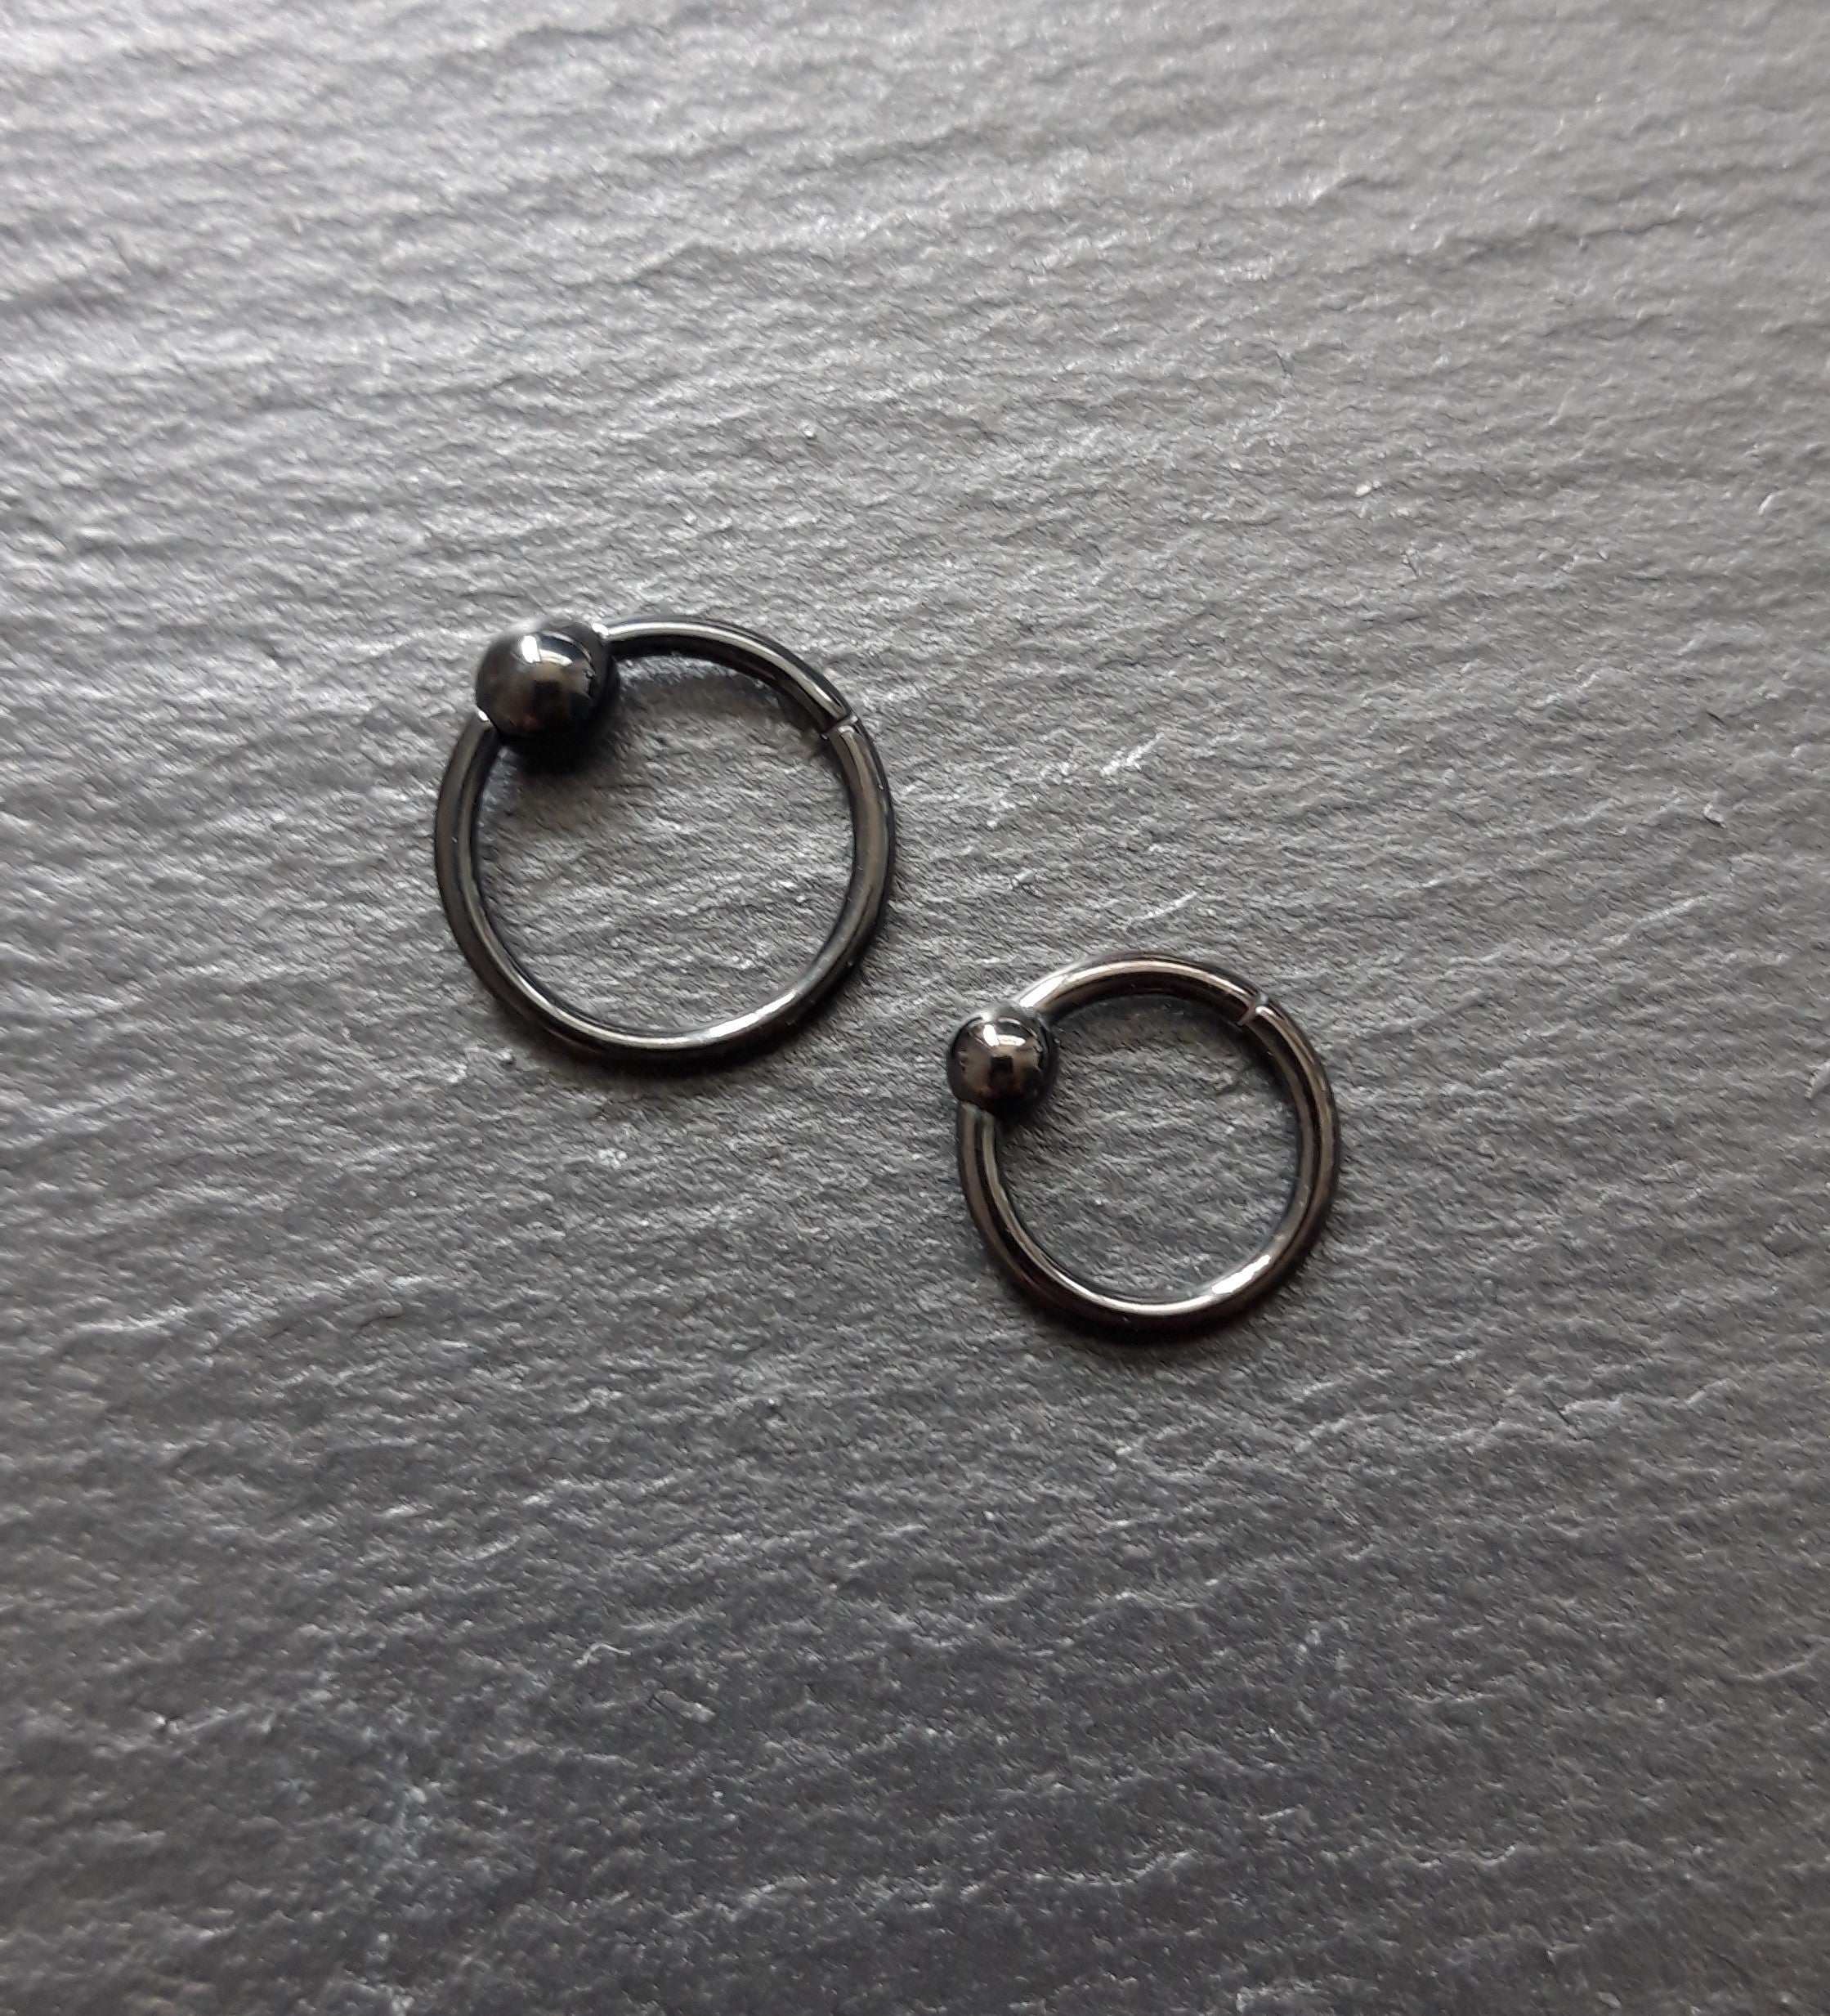 Black Steel Segment Ring Clicker mit Kugel - Stärke 1.6mm